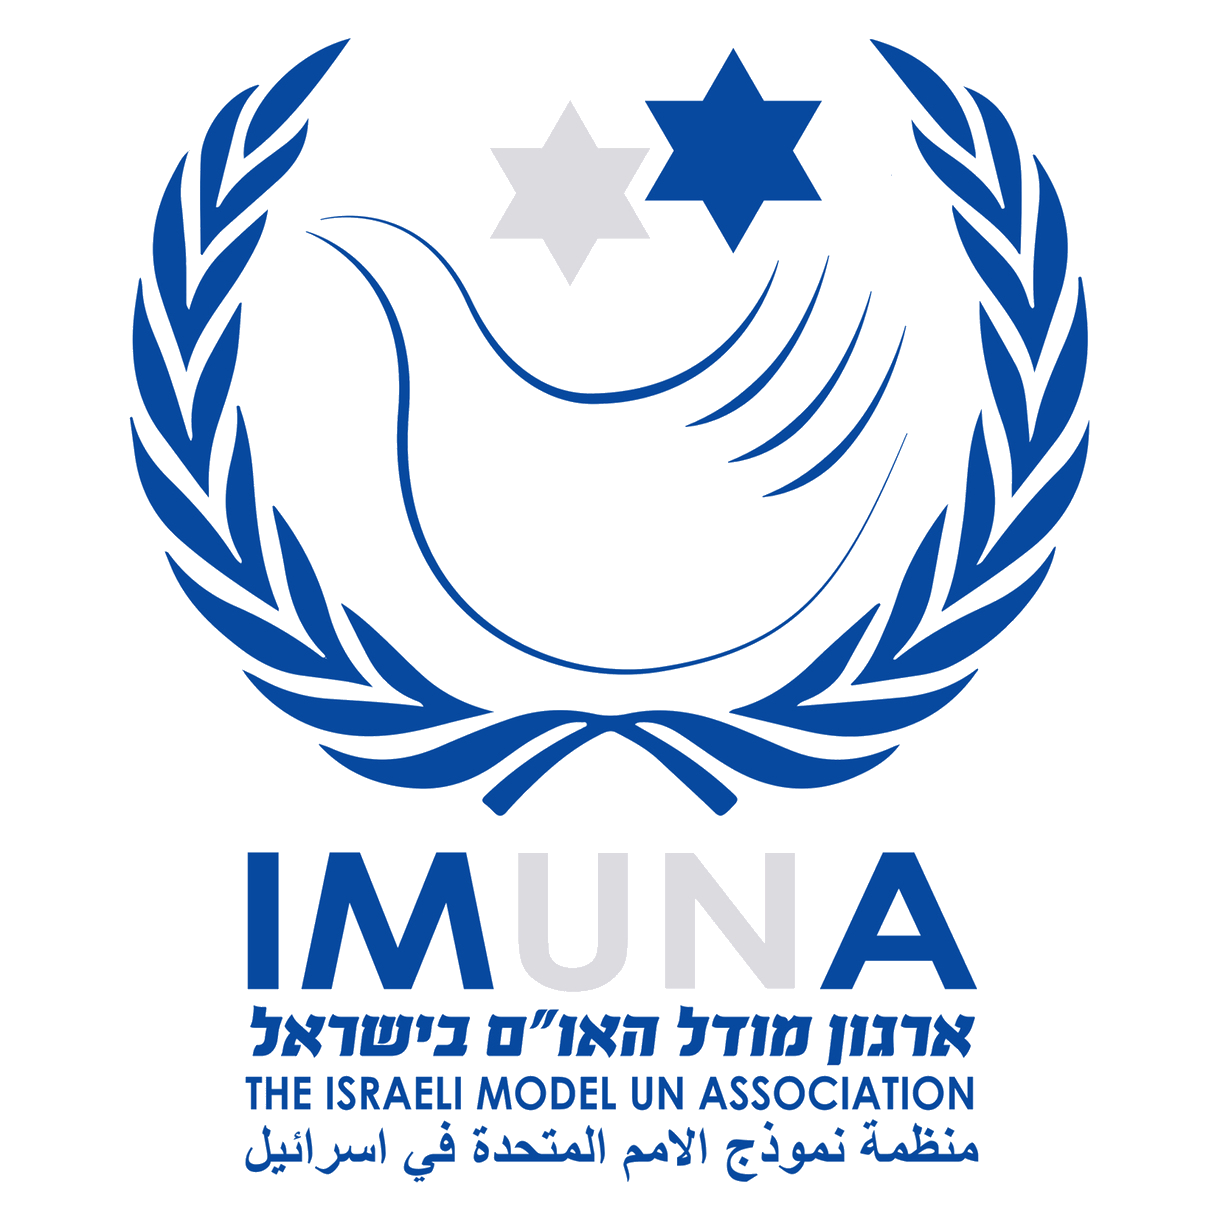 The Israeli Model UN Association (IMUNA) logo